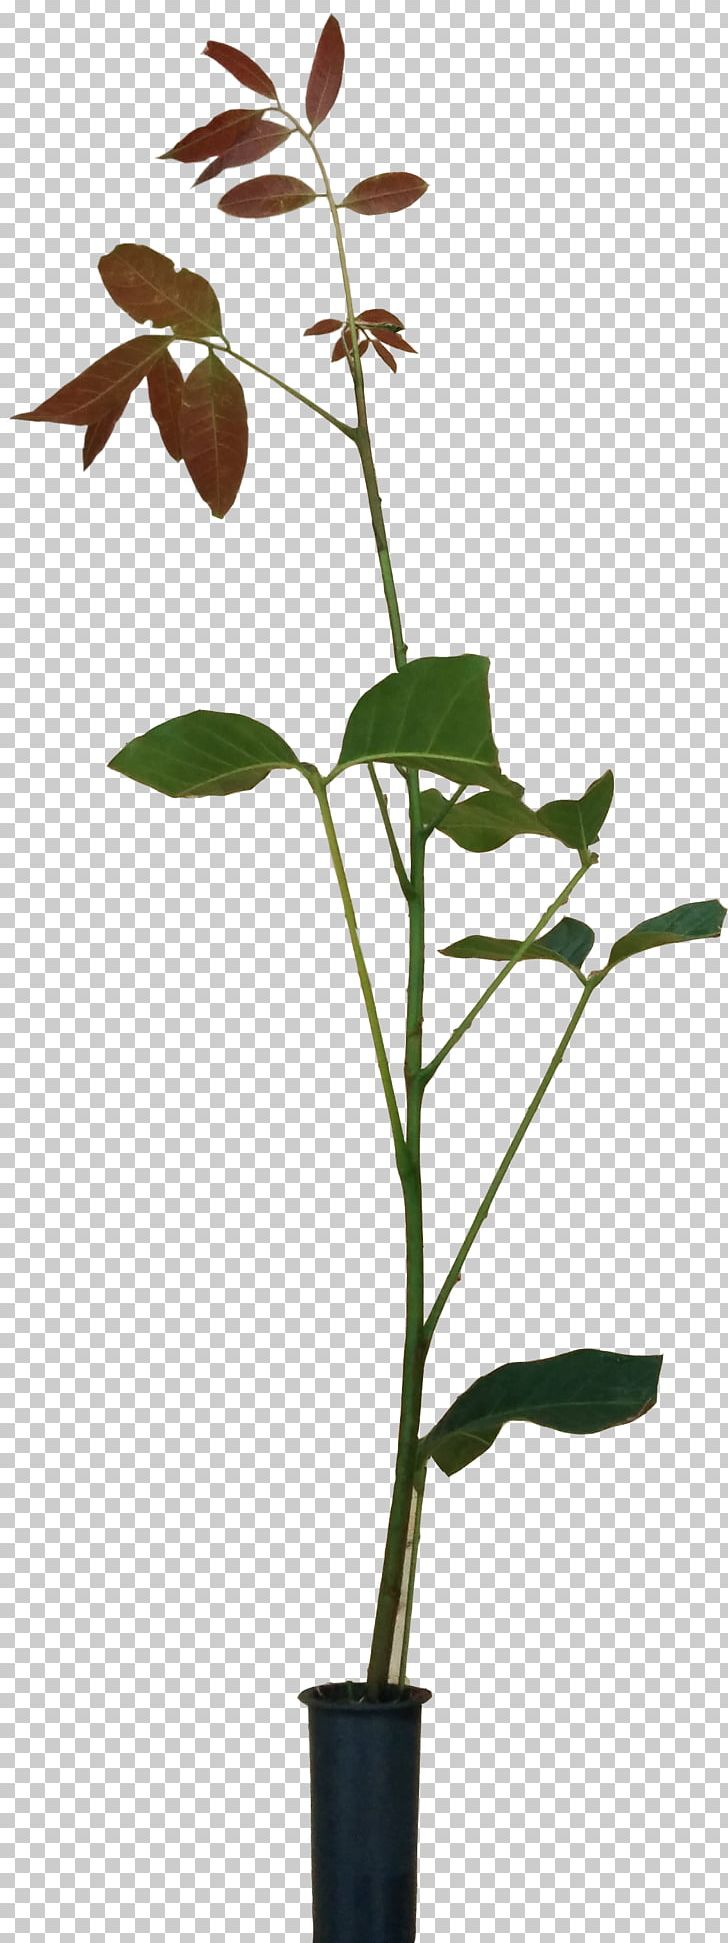 Twig Flowerpot Plant Stem Leaf PNG, Clipart, Branch, Flora, Flower, Flowering Plant, Flowerpot Free PNG Download